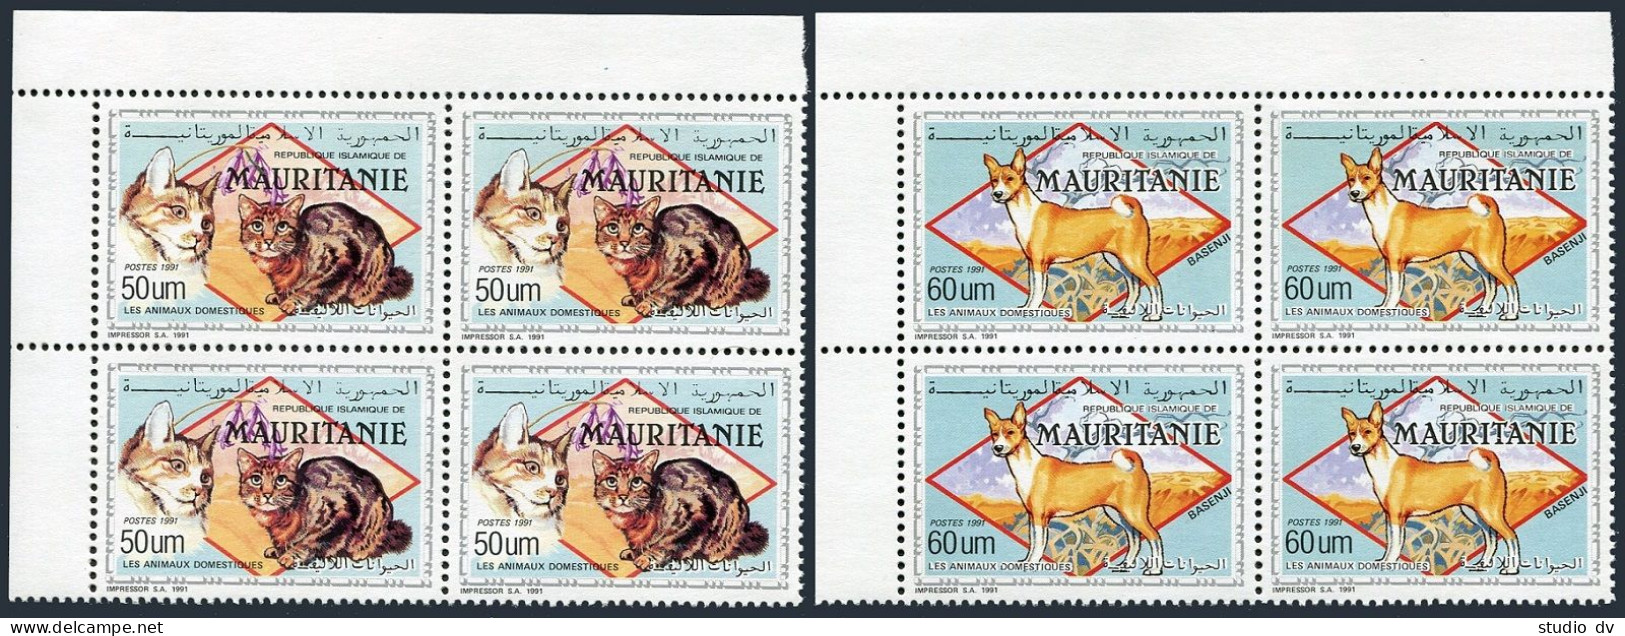 Mauritania 693-693A Blocks/4,MNH.Michel 999-1000. Cats,Dog,1991. - Mauritania (1960-...)